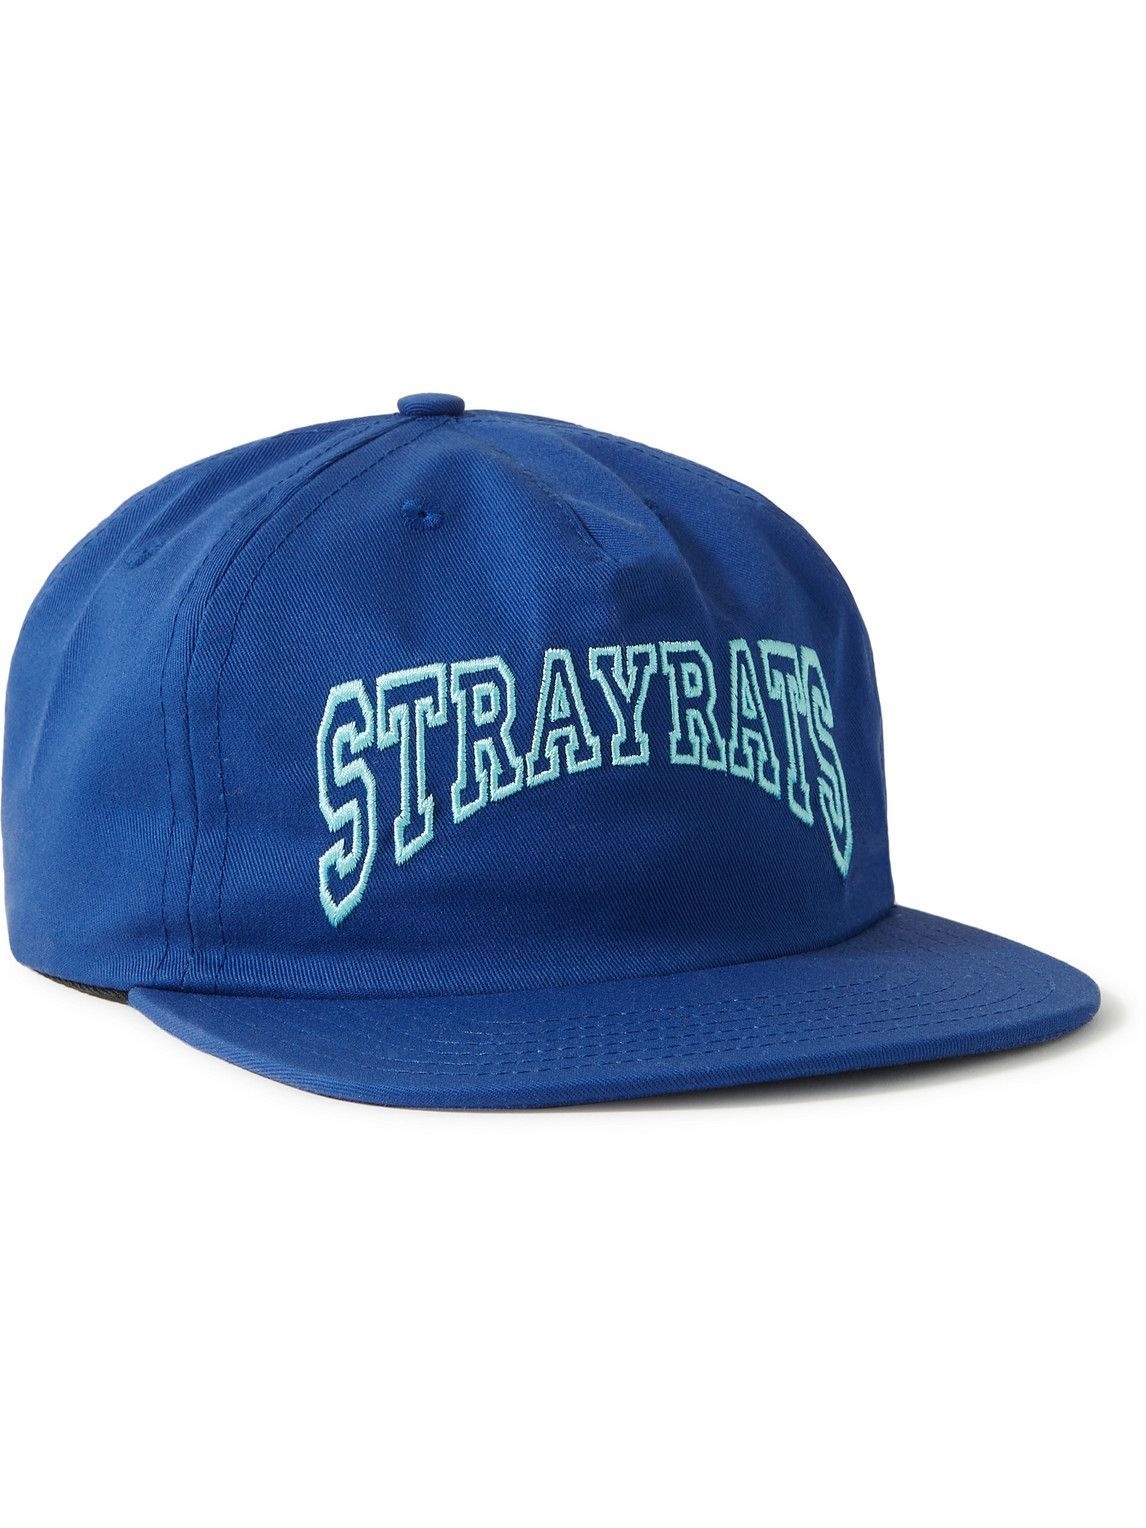 Photo: Stray Rats - Logo-Embroidered Brushed Cotton-Twill Baseball Cap